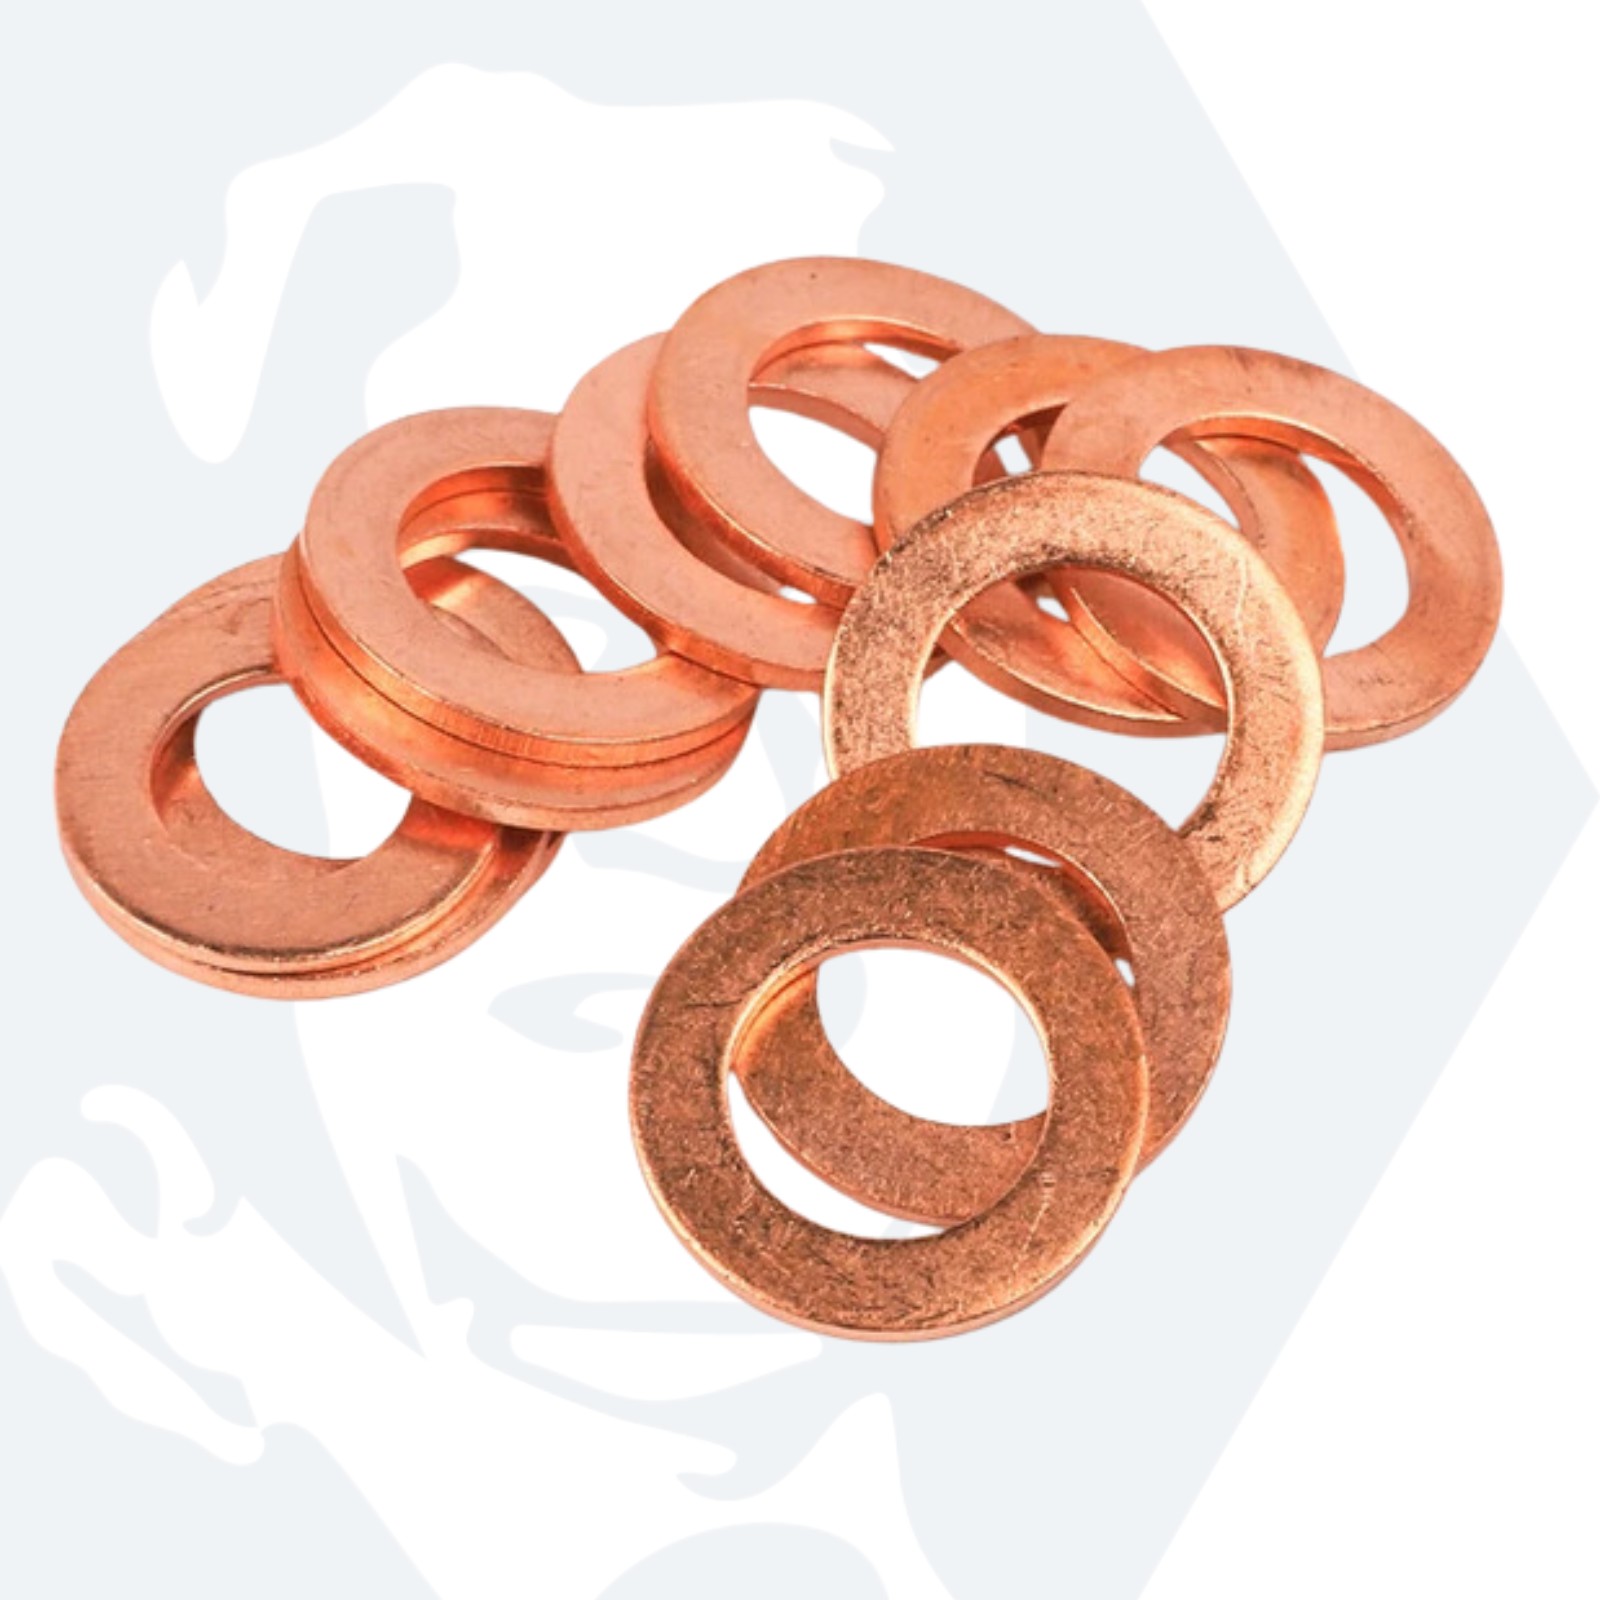 M7 x 10mm x 1mm Sealing Washers - Copper